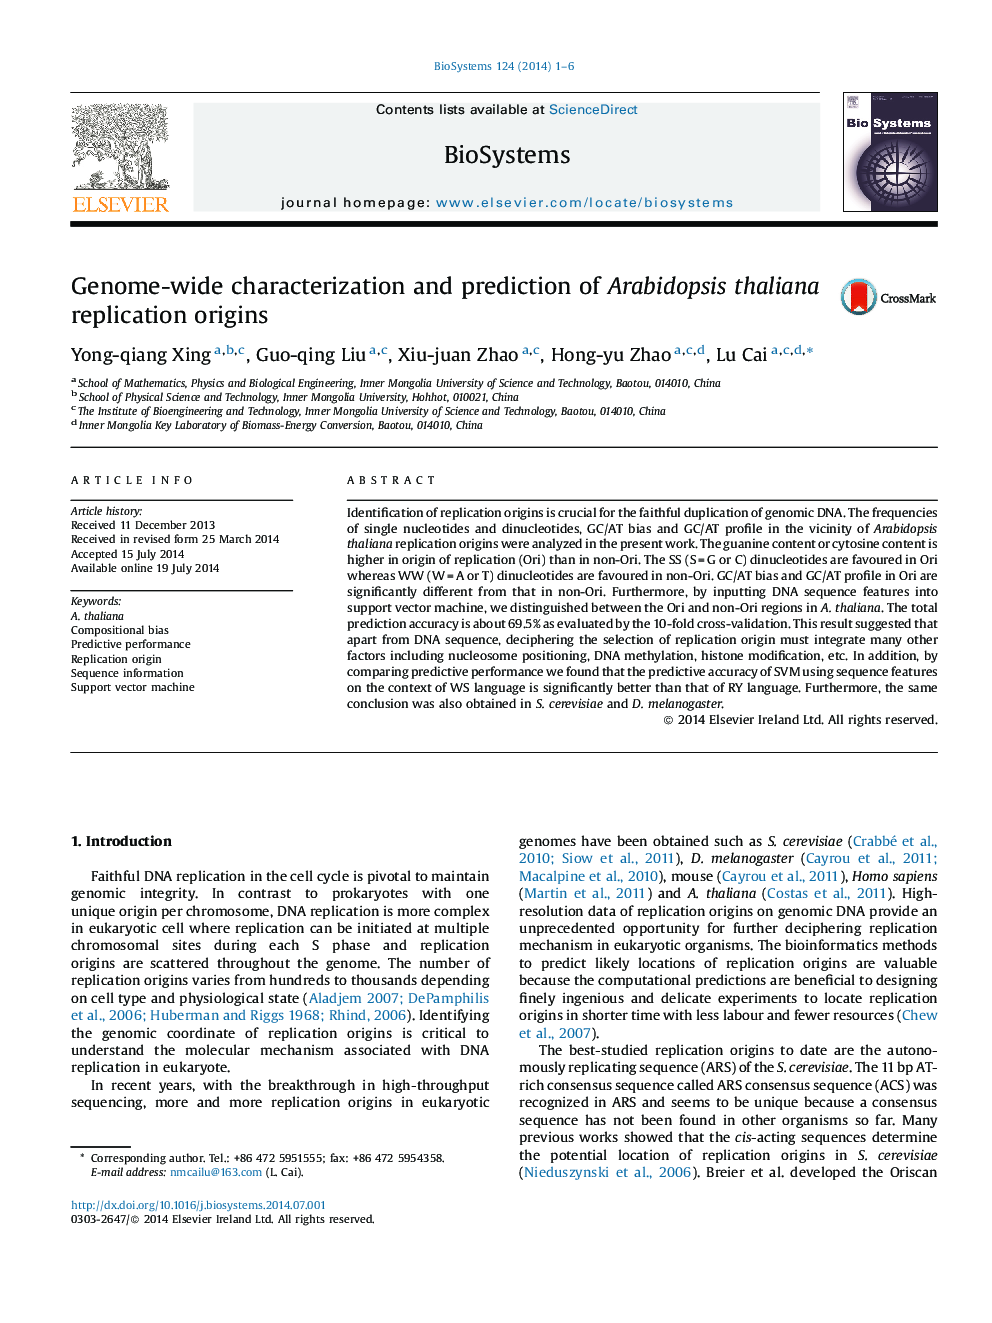 Genome-wide characterization and prediction of Arabidopsis thaliana replication origins